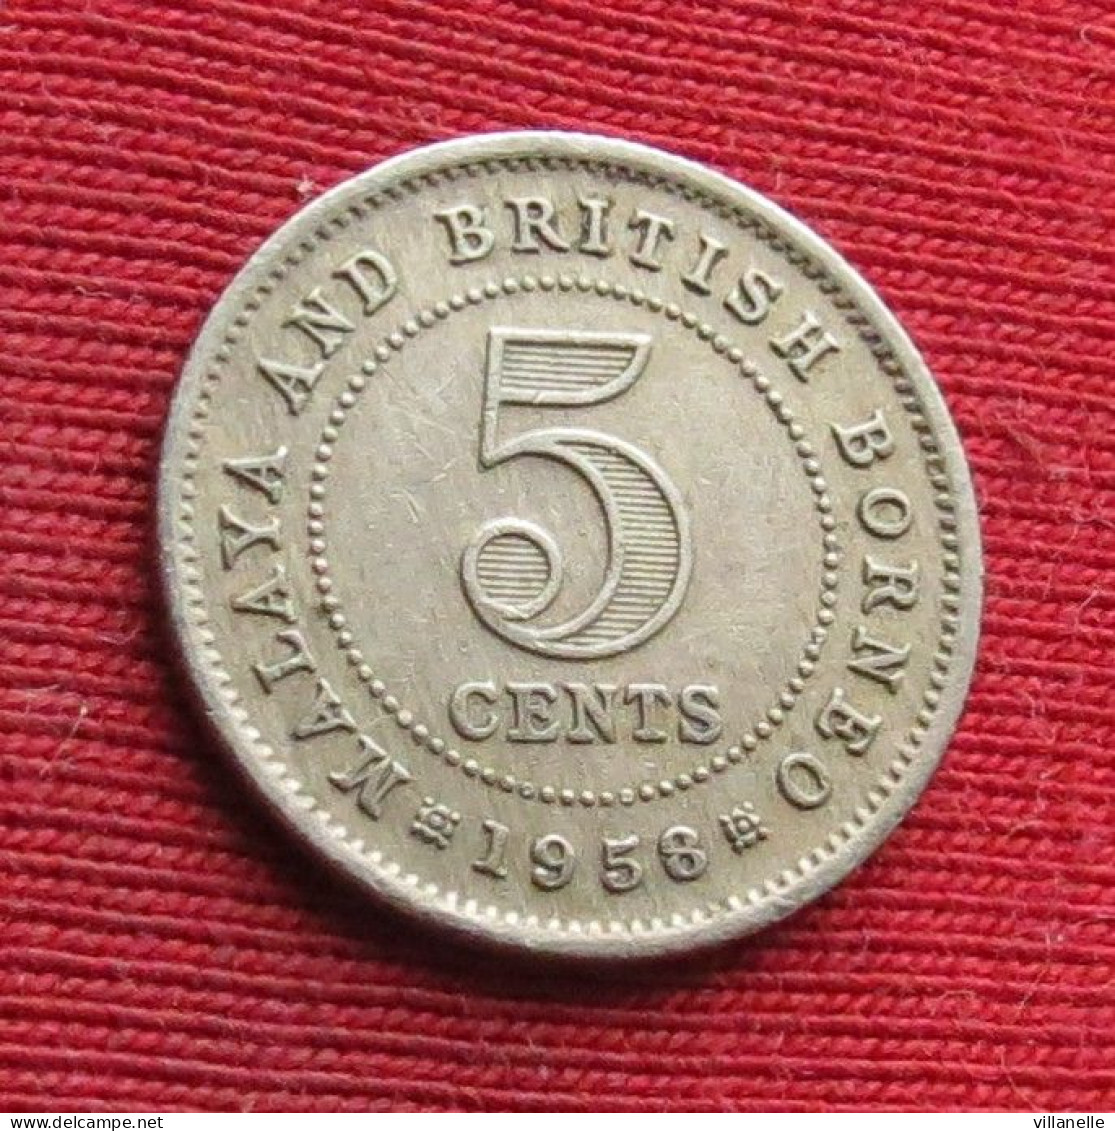 Malaya And British Borneo 5 Cents 1958 #2 W ºº - Malaysie